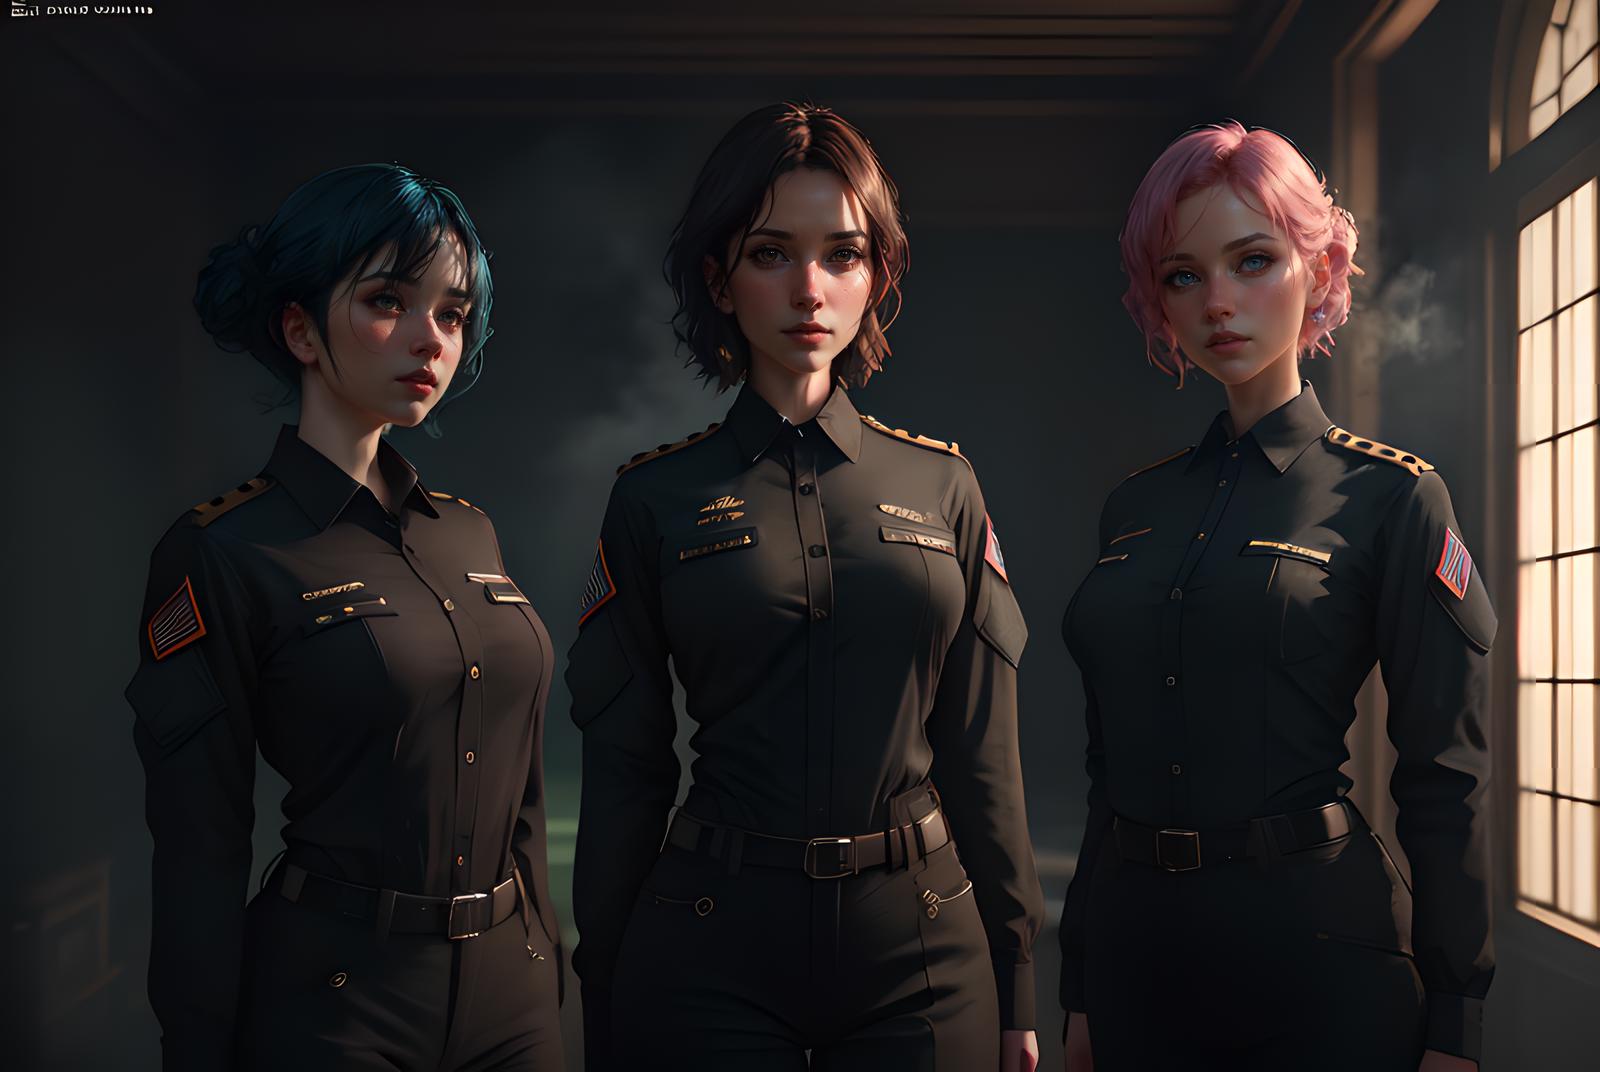 Three cartoon women in uniform standing together.